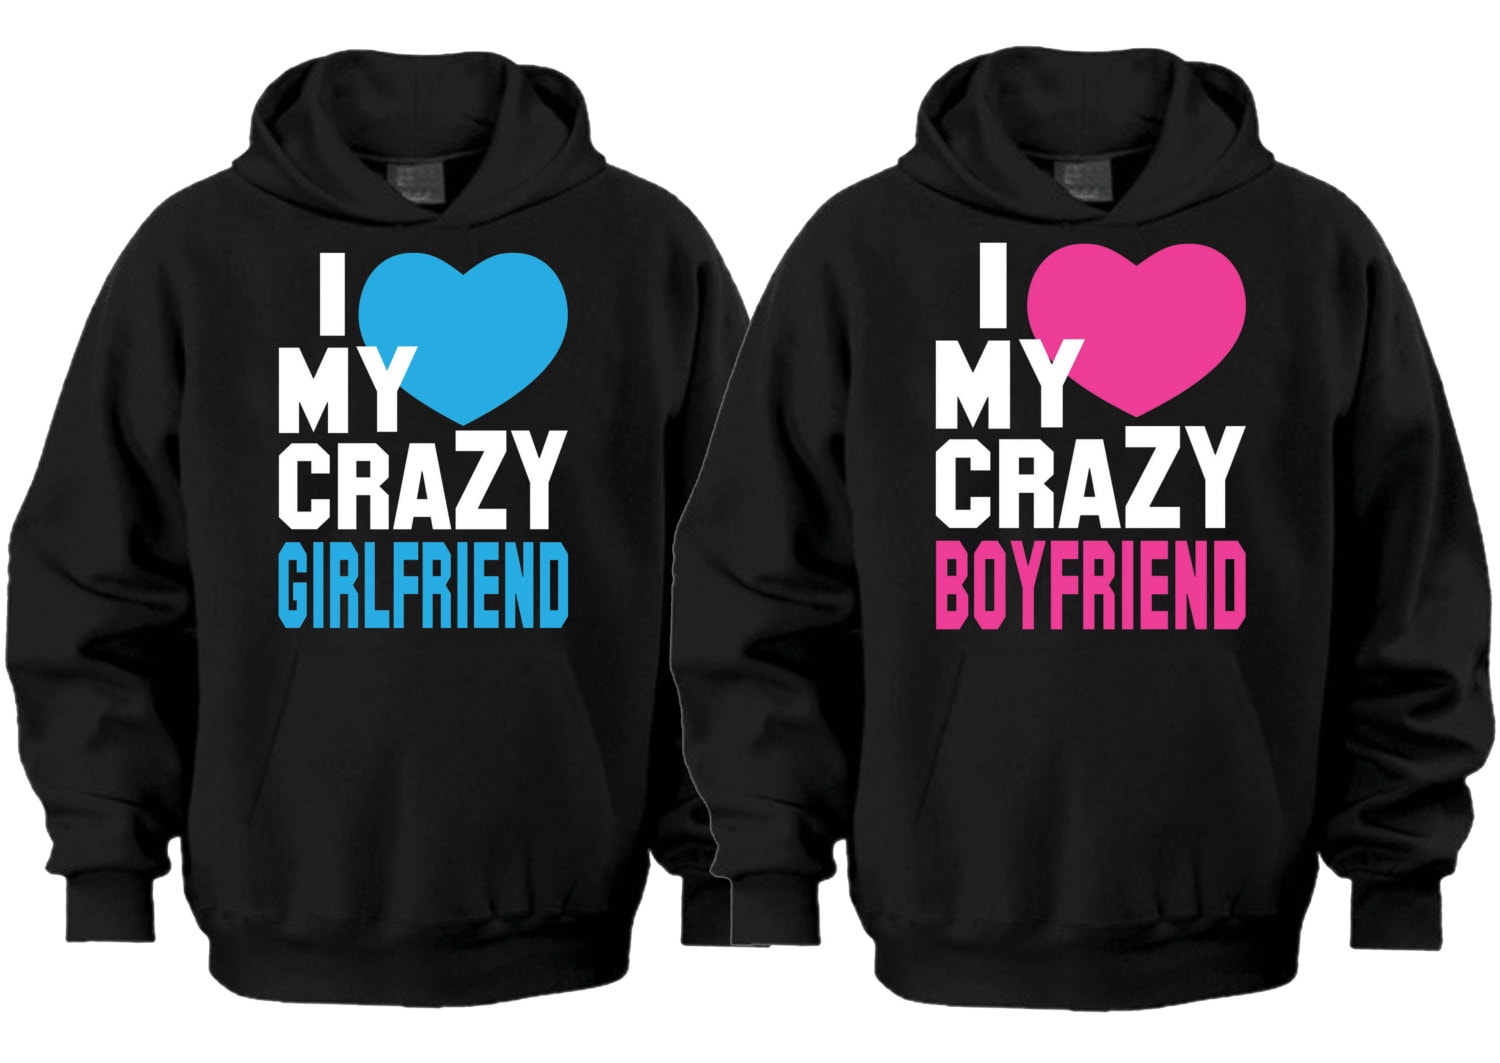 I Love My Crazy BF / GF Hoodies Price is for 2 hoodies